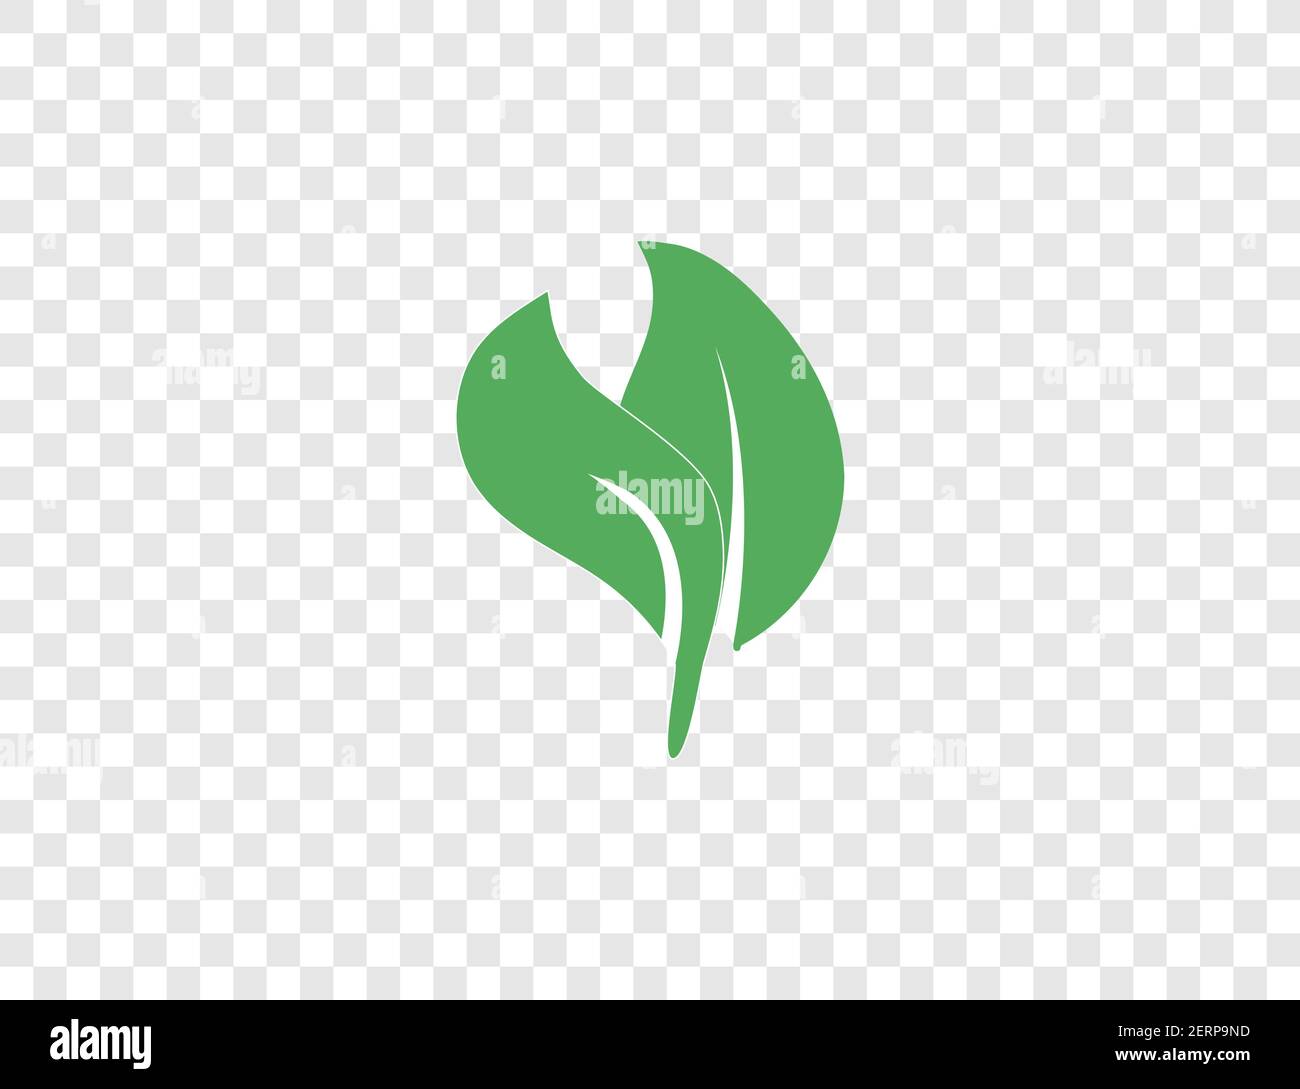 Foglia verde, icona Eco su sfondo trasparente. Illustrazione vettoriale. Illustrazione Vettoriale